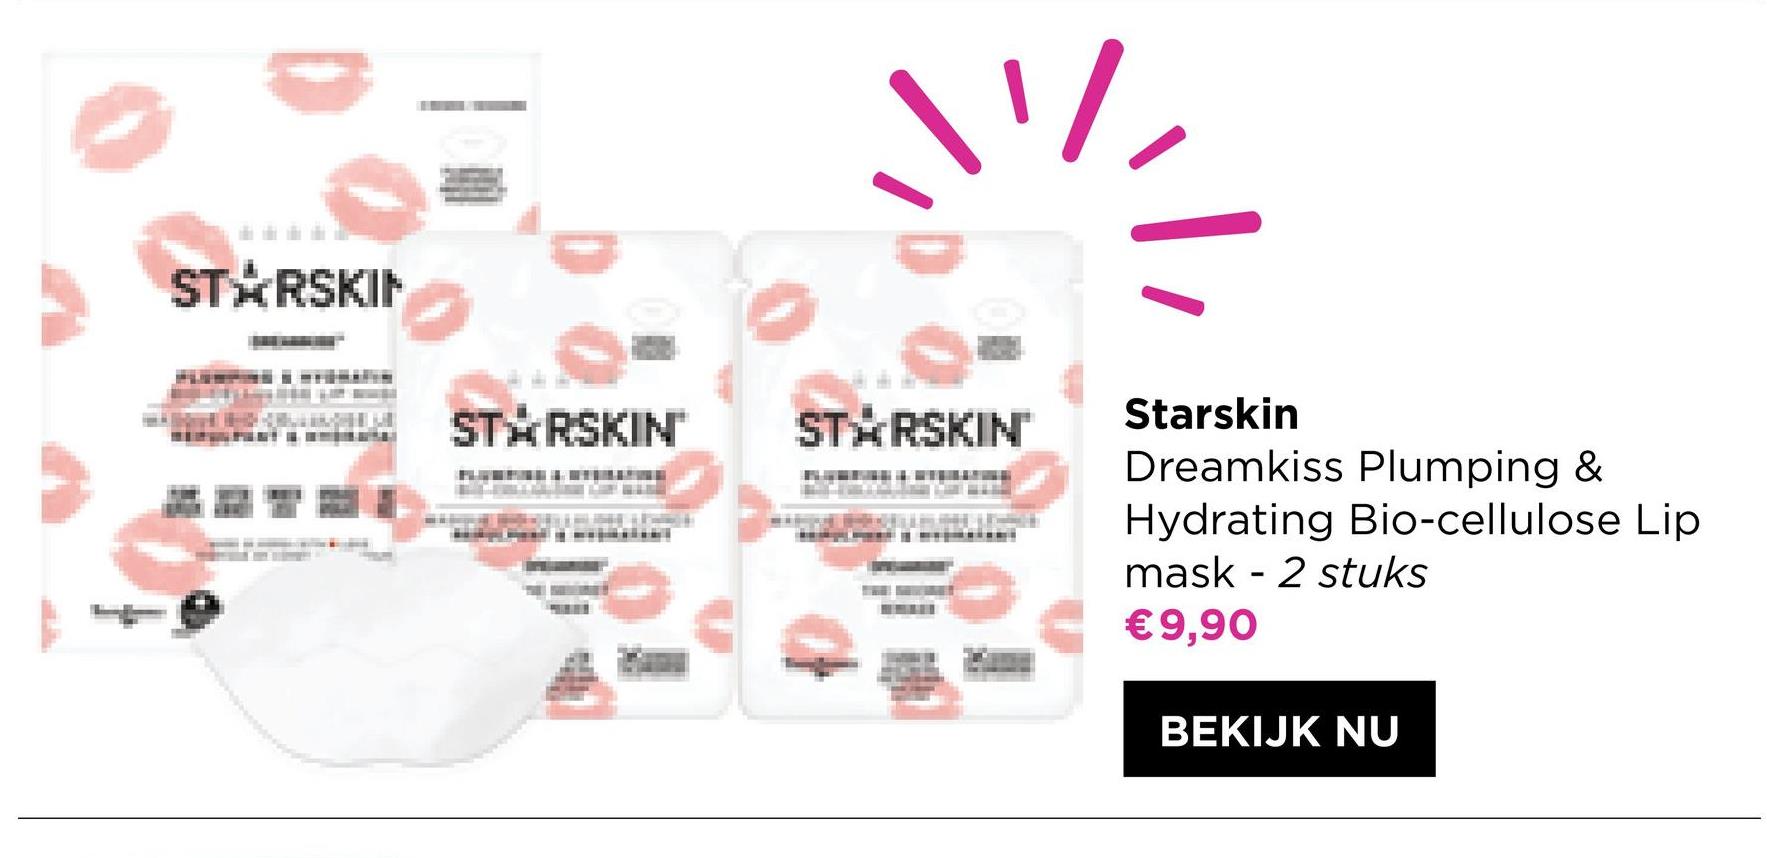 STÅRSKIH
STÅRSKIN
STYRSKIN
Starskin
Dreamkiss Plumping &
Hydrating Bio-cellulose Lip
mask - 2 stuks
€9,90
-
BEKIJK NU
